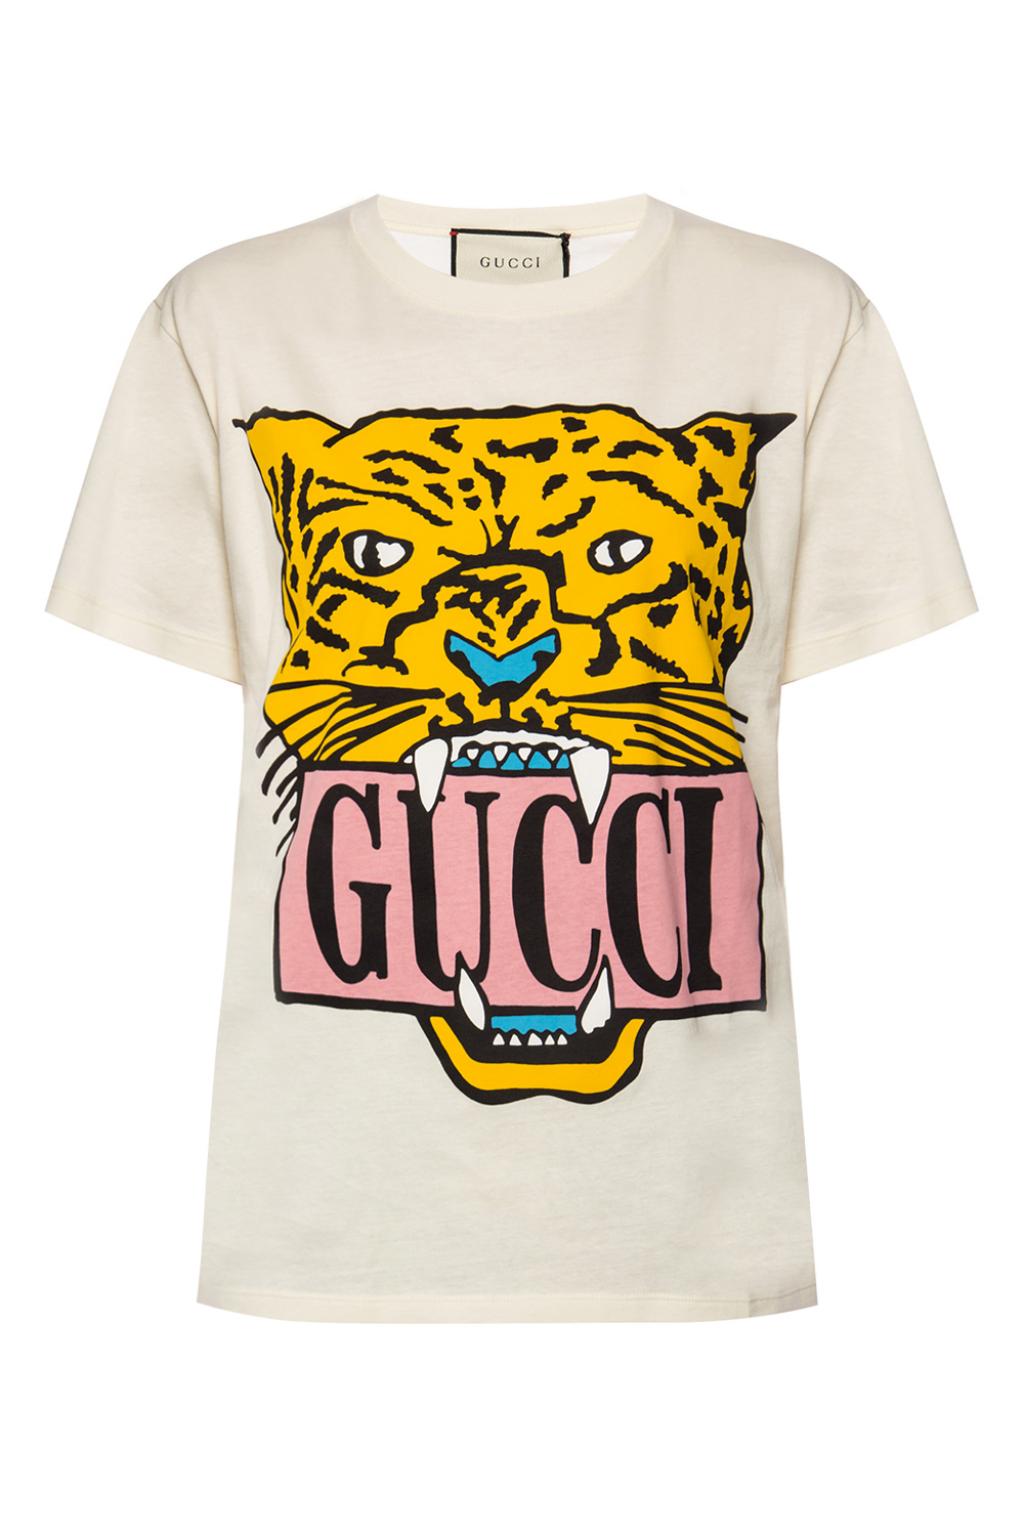 Gucci Colourful-printed T-shirt | Women's Clothing | Vitkac